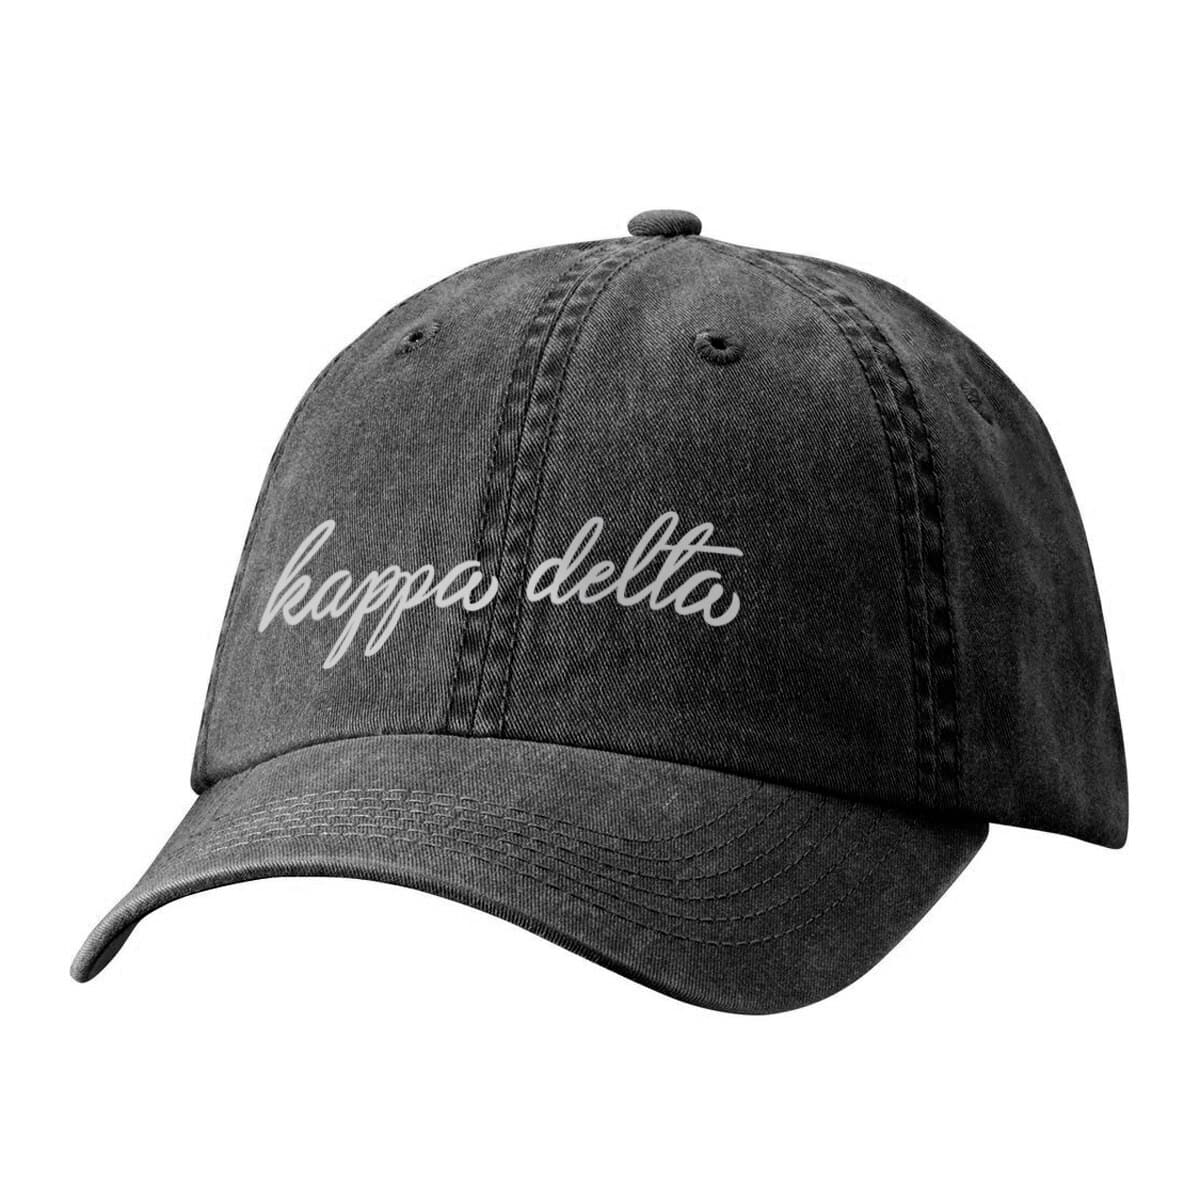 Kappa Delta Pigment Dyed Hat | Kappa Delta | Headwear > Billed hats